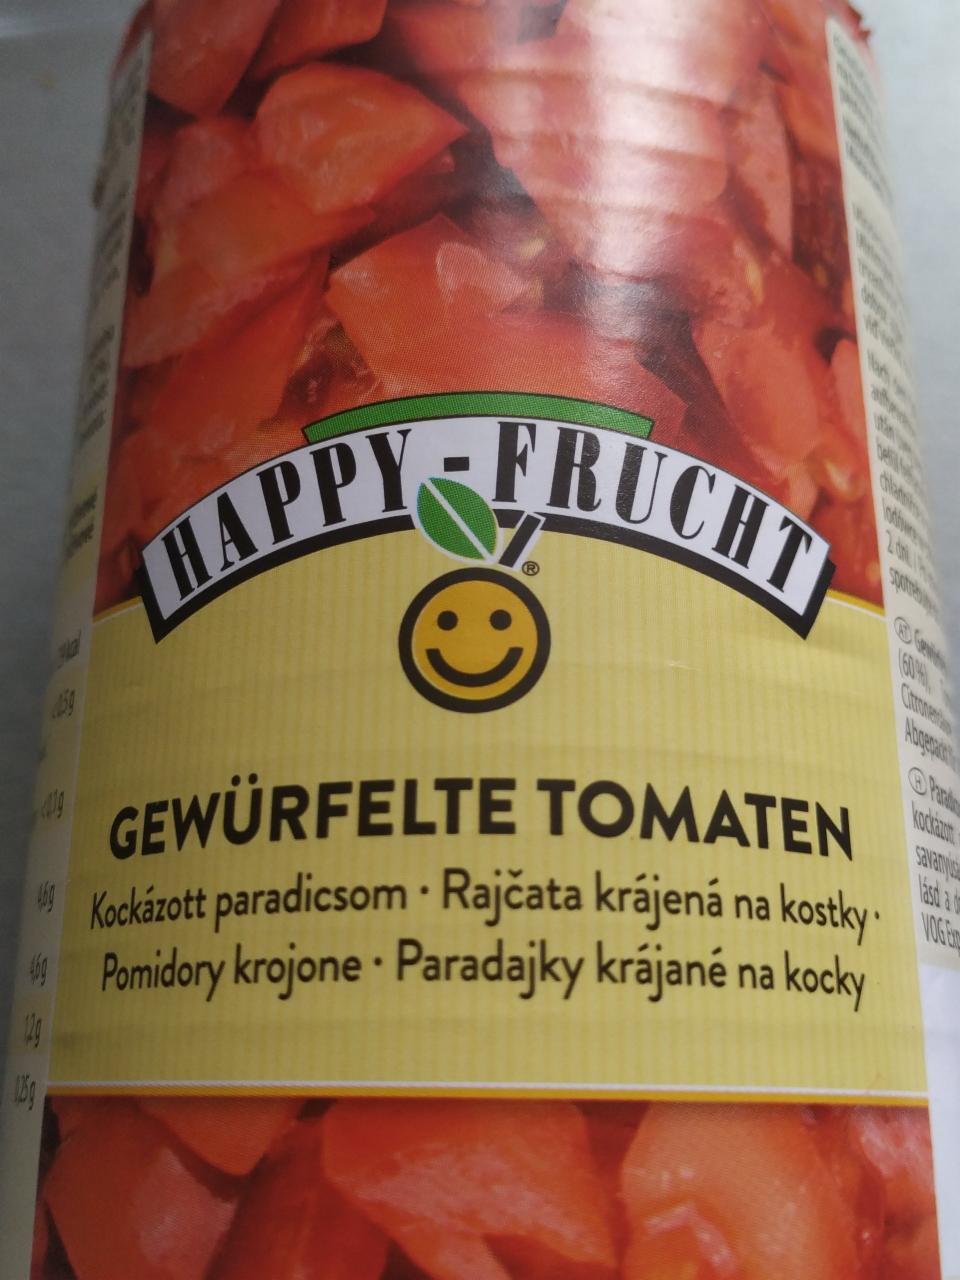 Zdjęcia - Gewürfelte tomaten (pomidory krojone) Happy - frucht